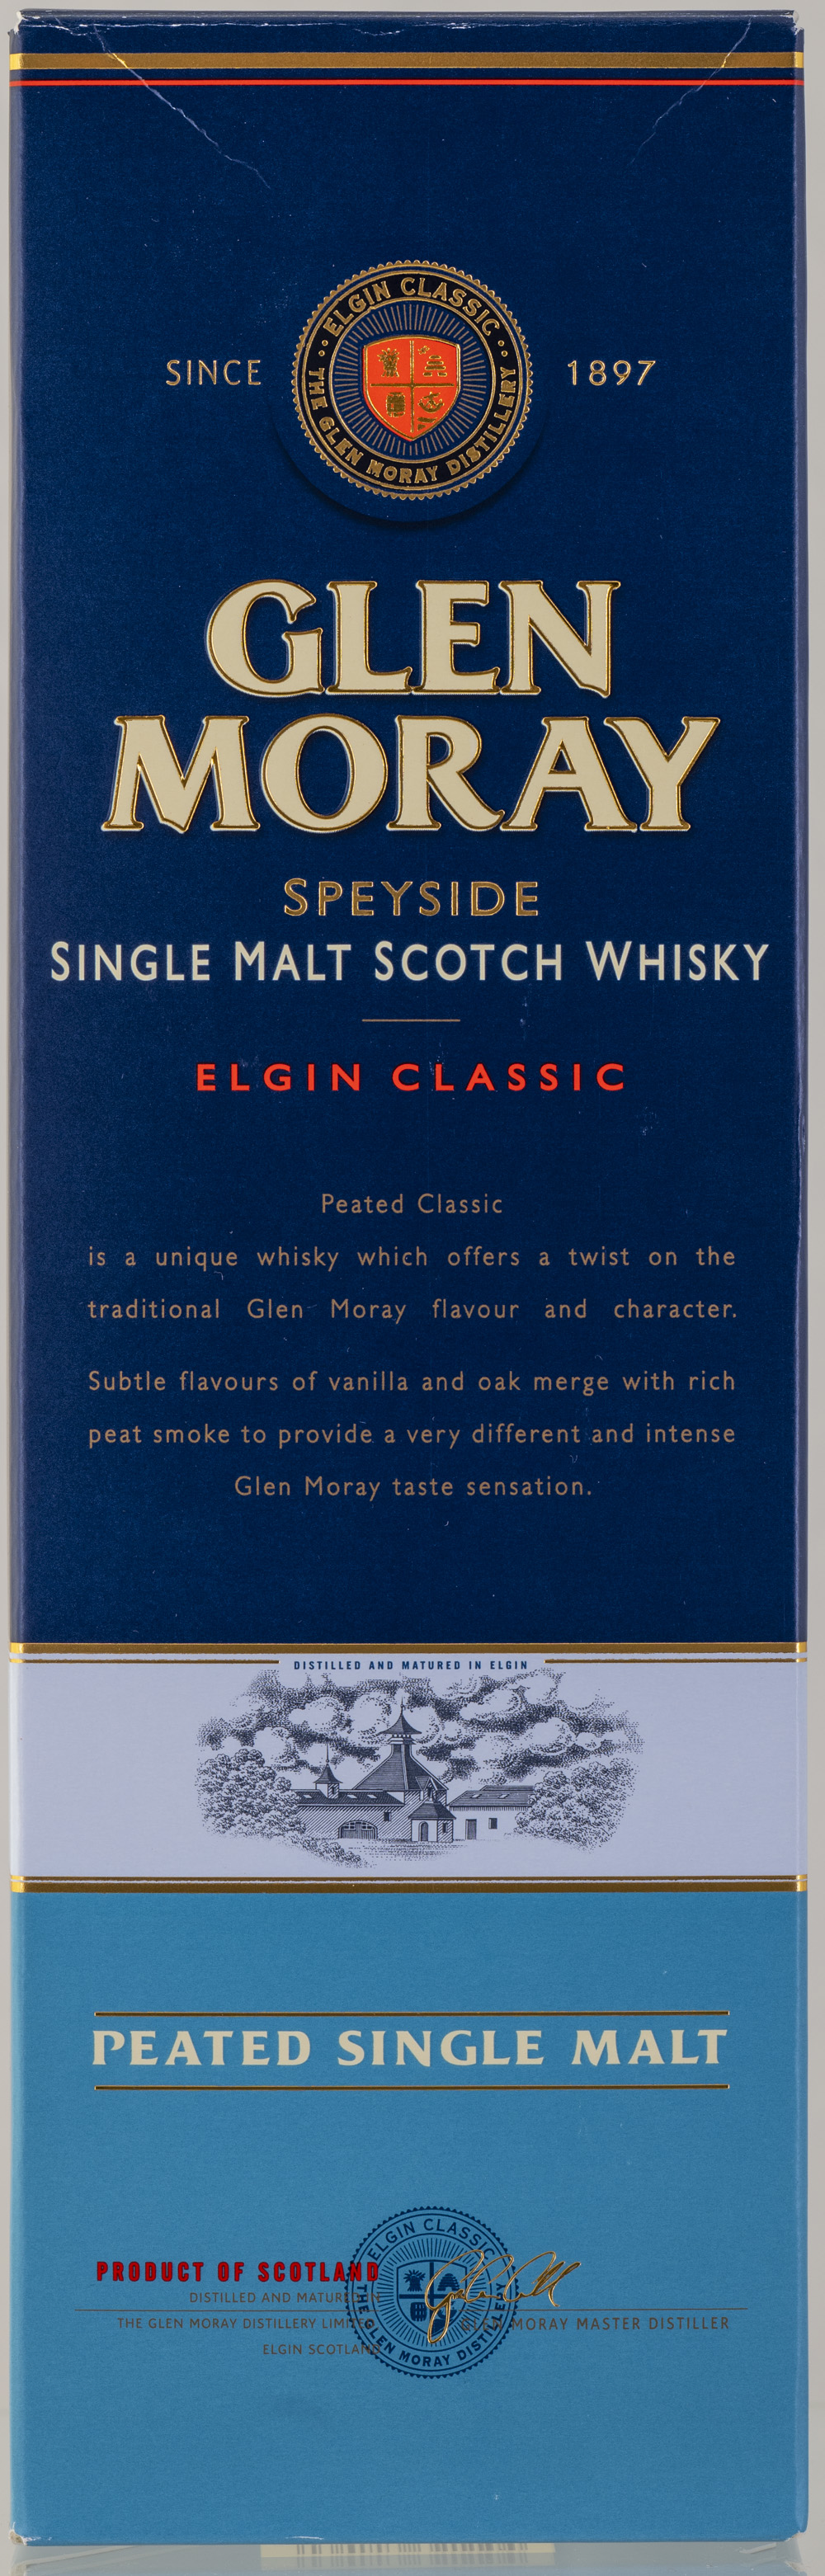 Billede: PHC_2270 - Glen Moray - Elgin Classic Peated - box front.jpg